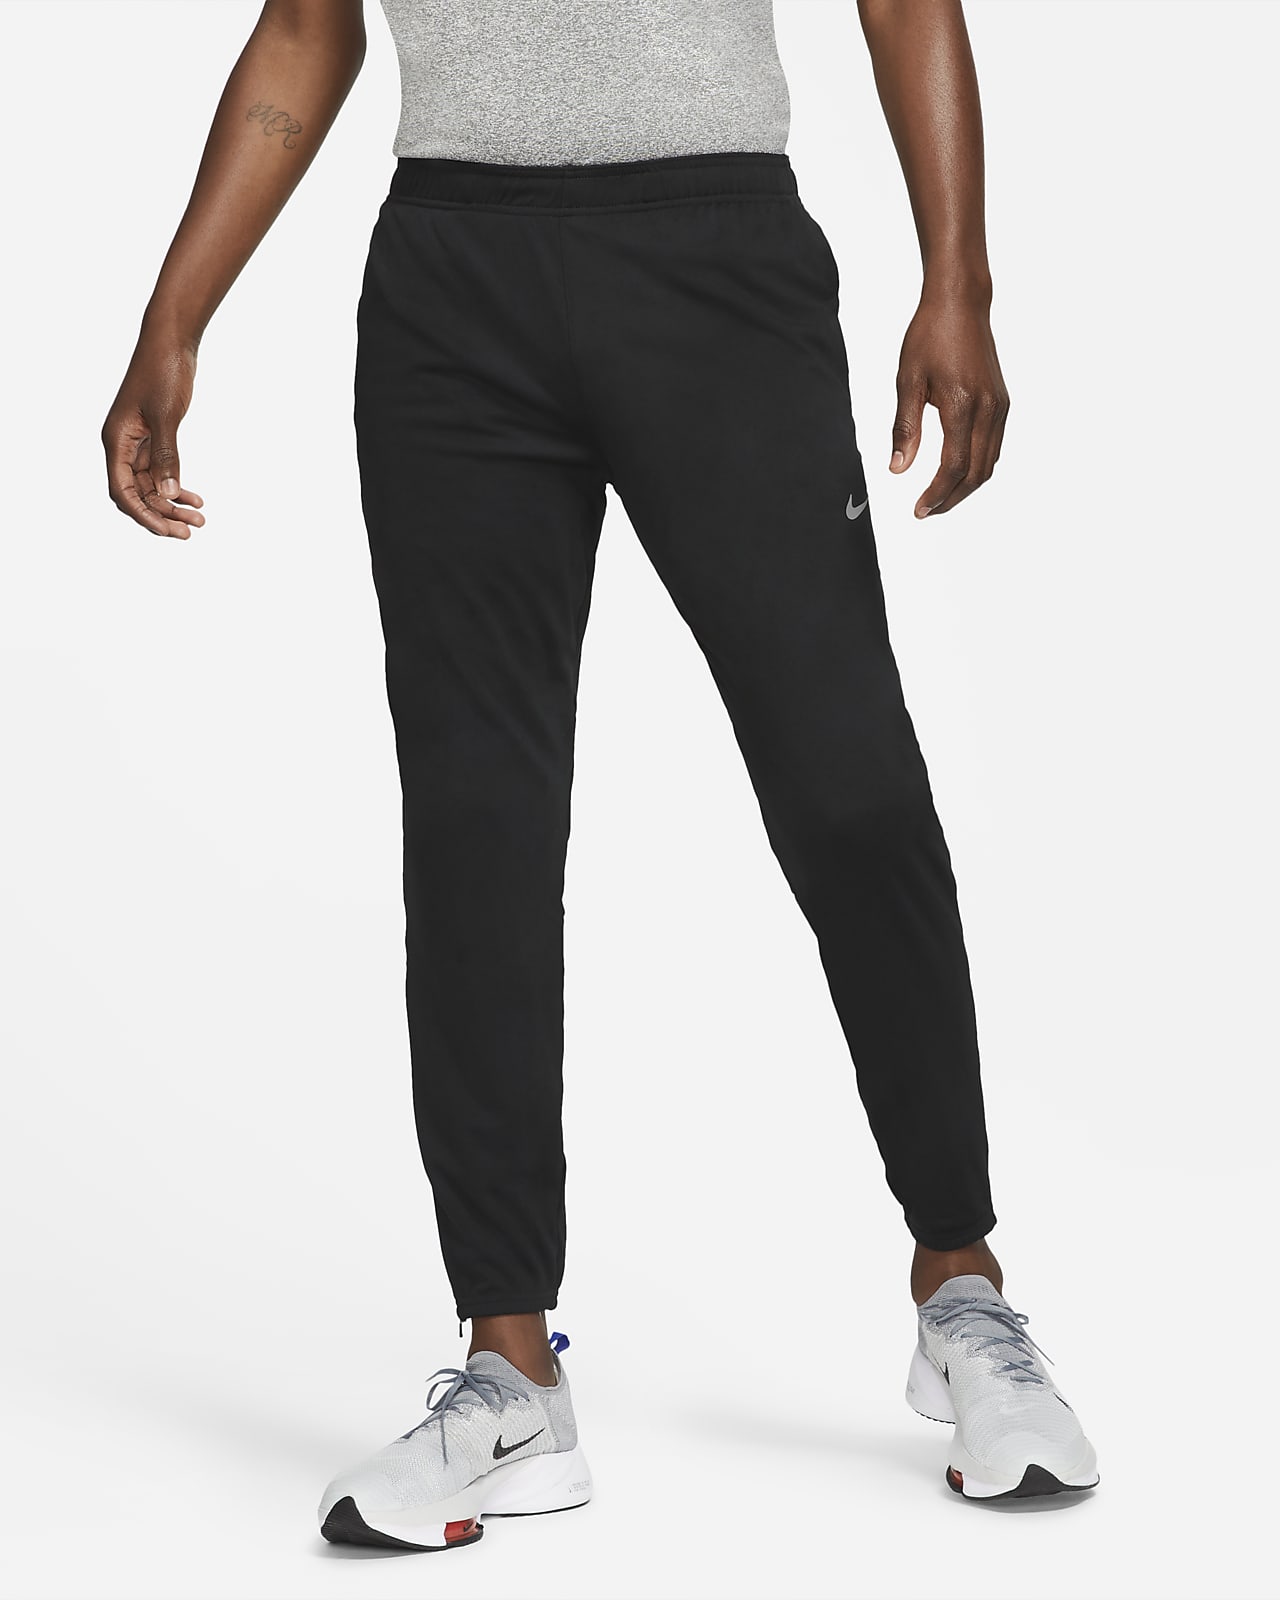 Segundo grado sal distancia Pants de tejido Knit de running para hombre Nike Dri-FIT Challenger. Nike MX